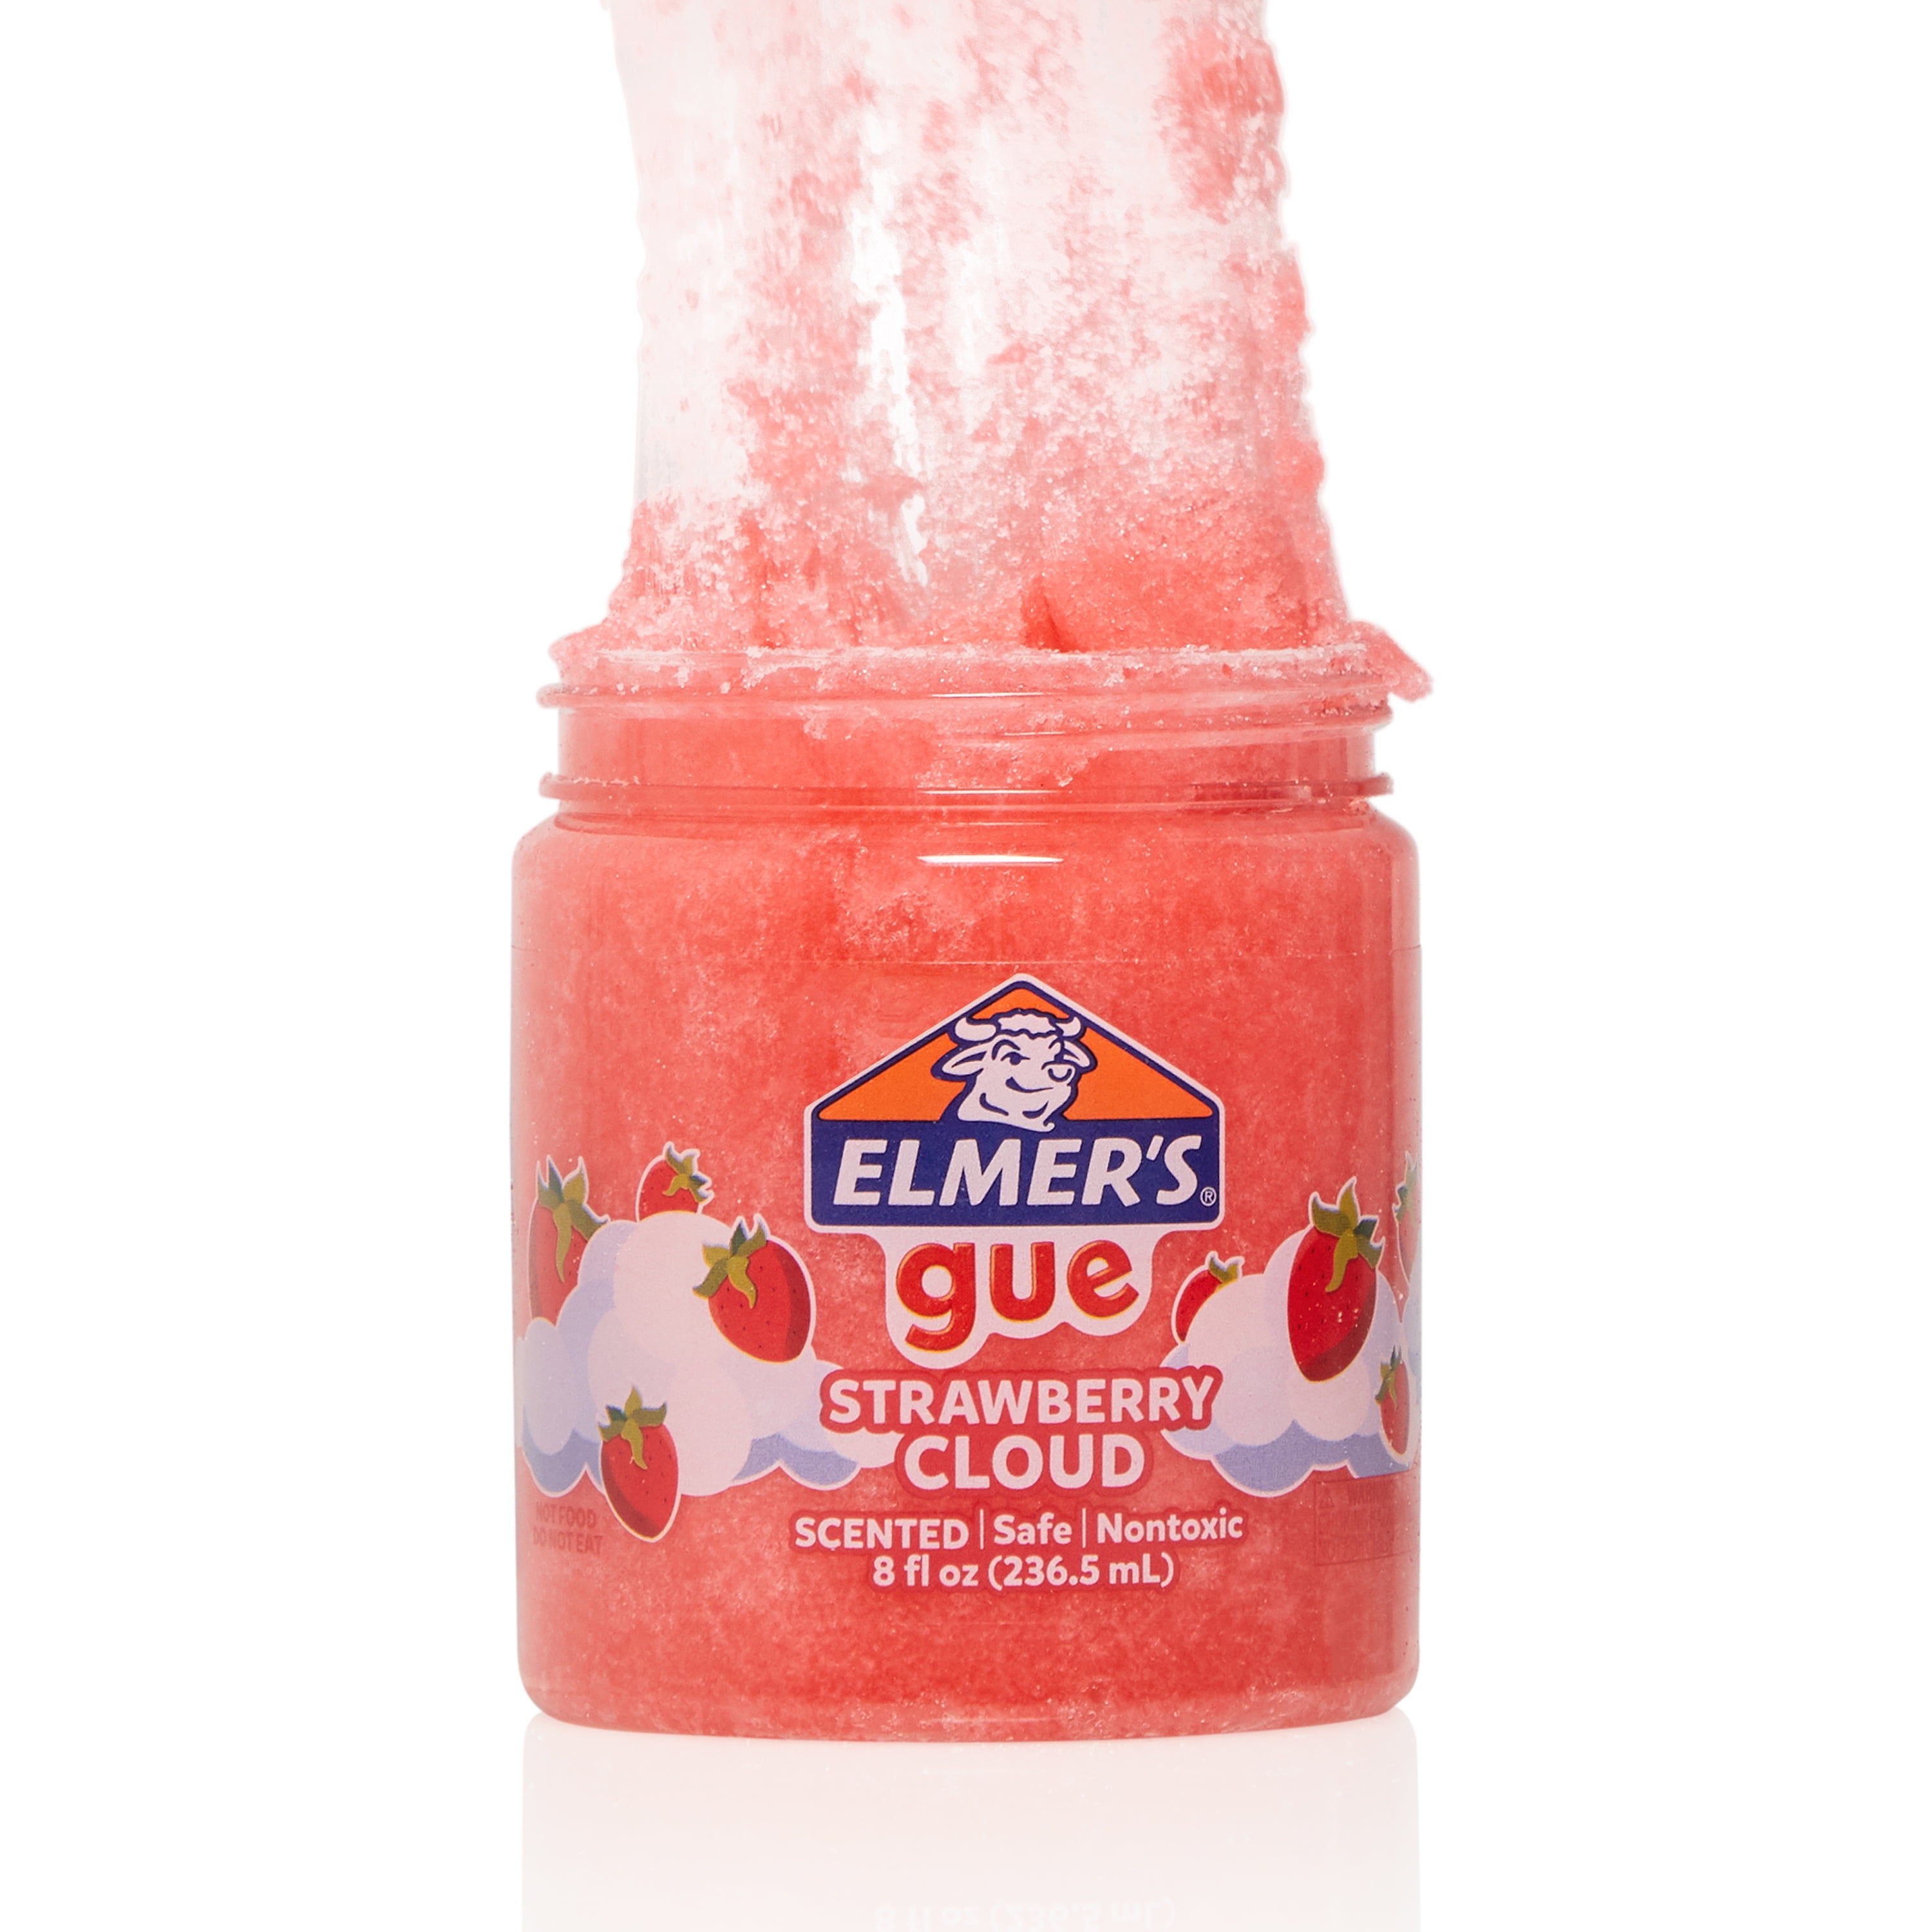 Elmer's Gue, Blueberry Cloud - 8 fl oz